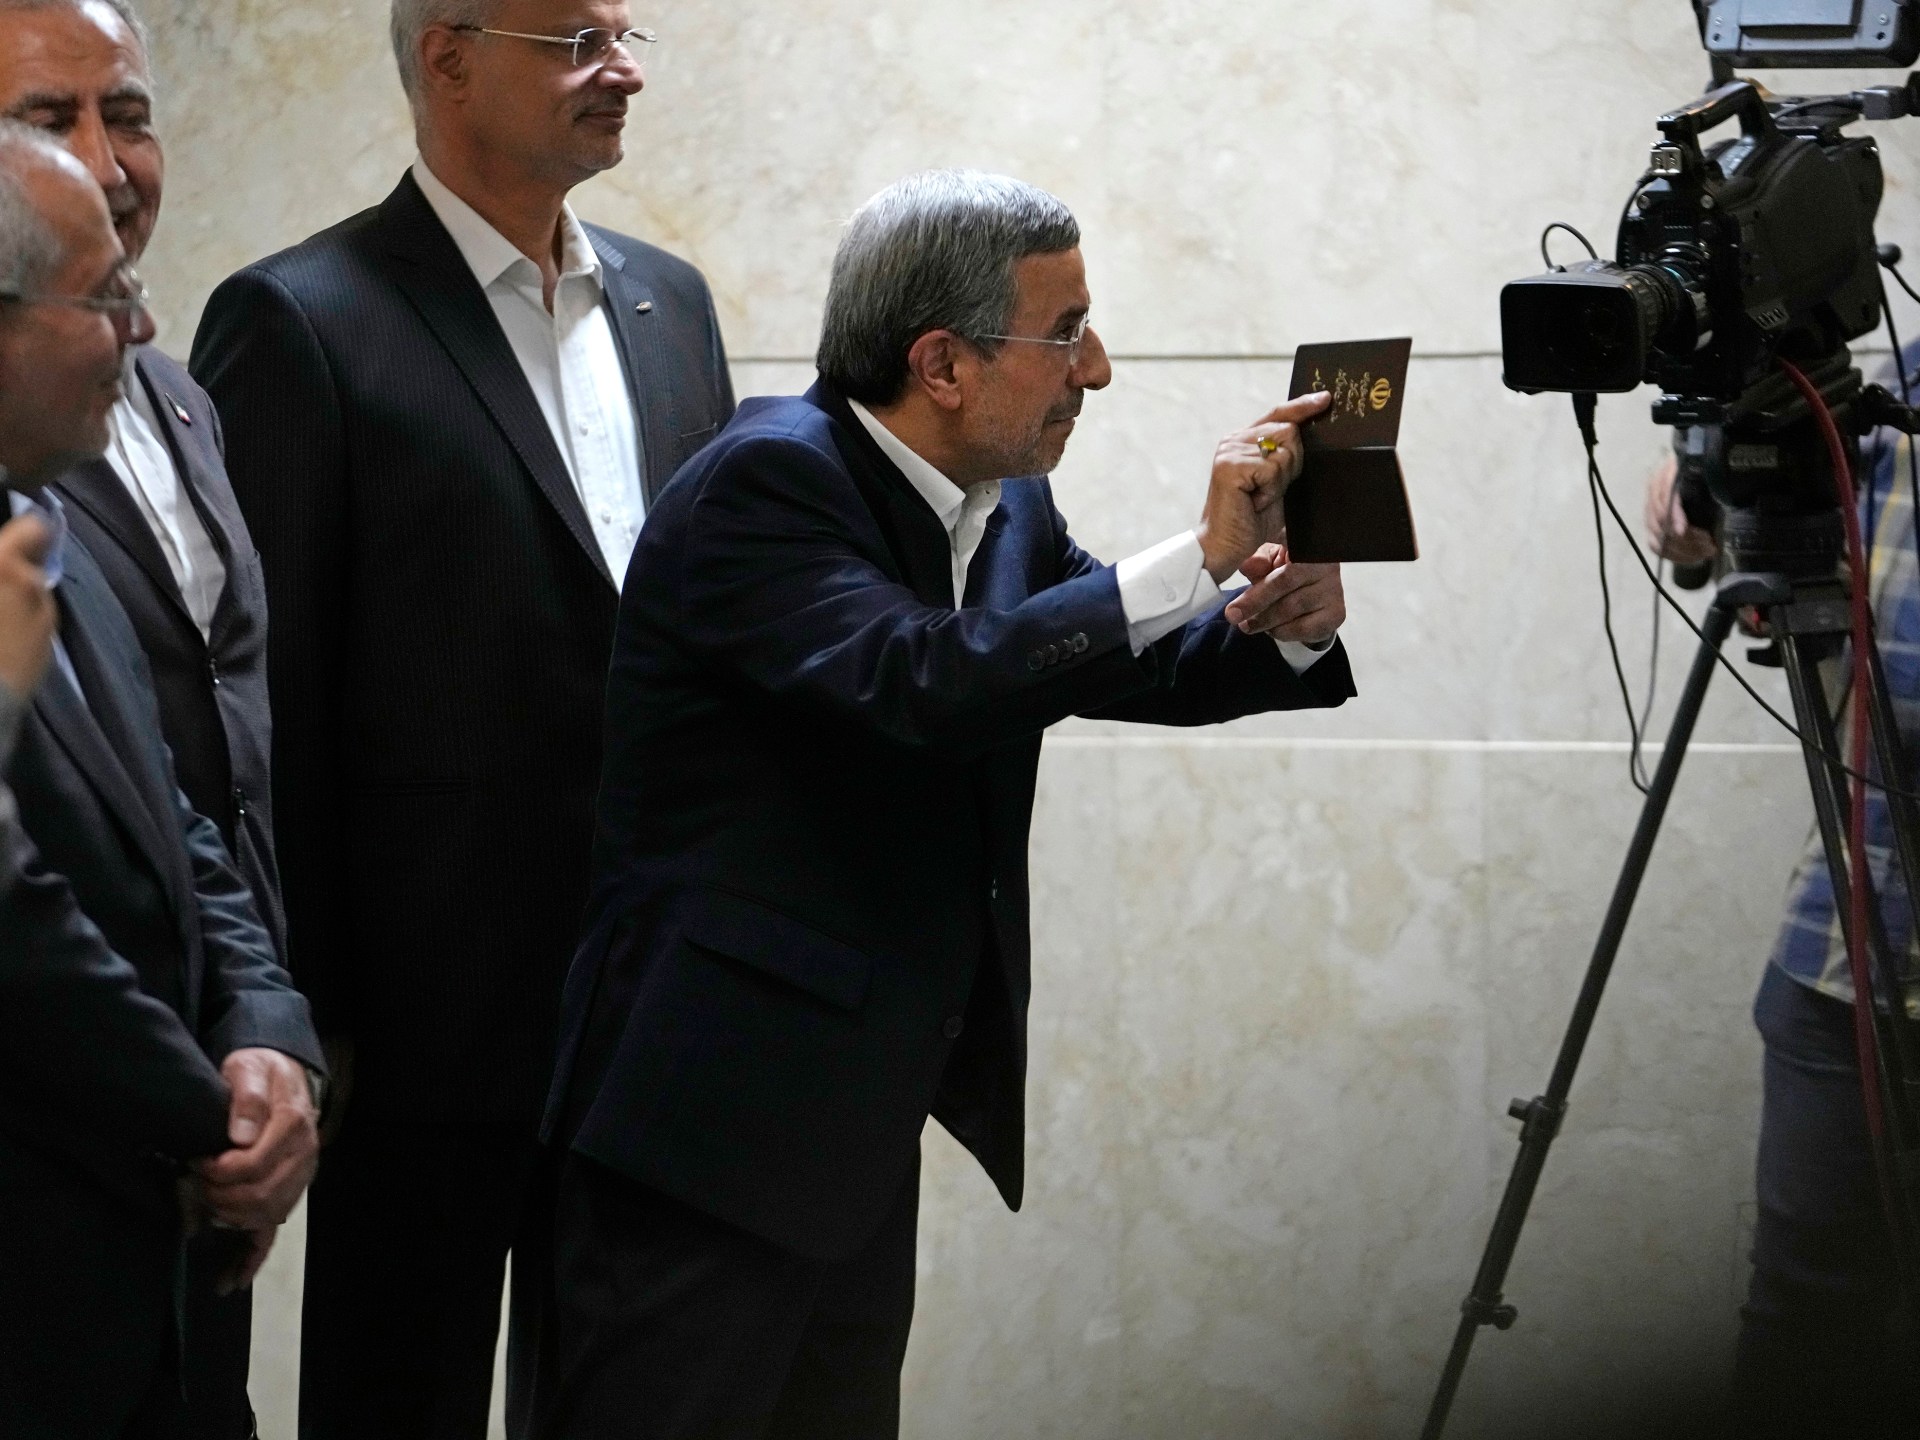 Iran’s expresident Ahmadinejad, disqualified Larijani sign up for